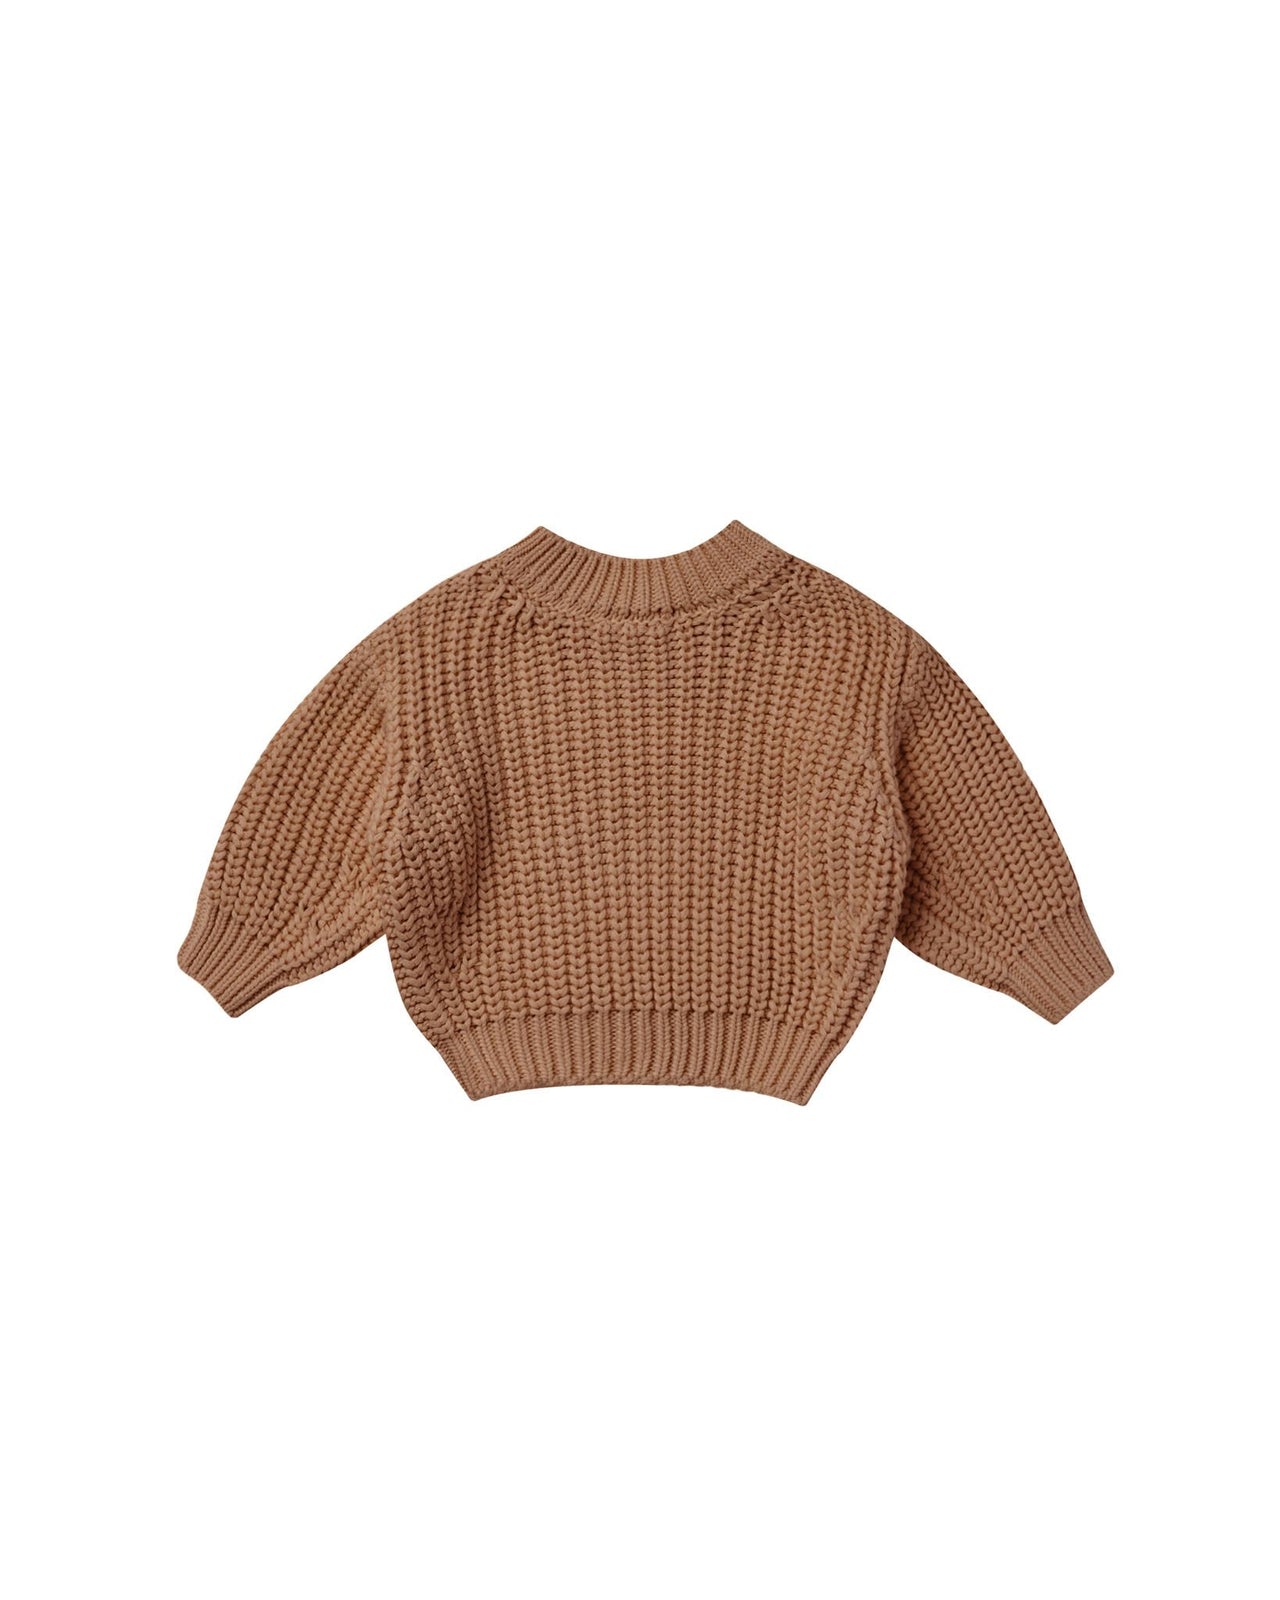 Quincy Mae Chunky Knit Sweater, Cinnamon